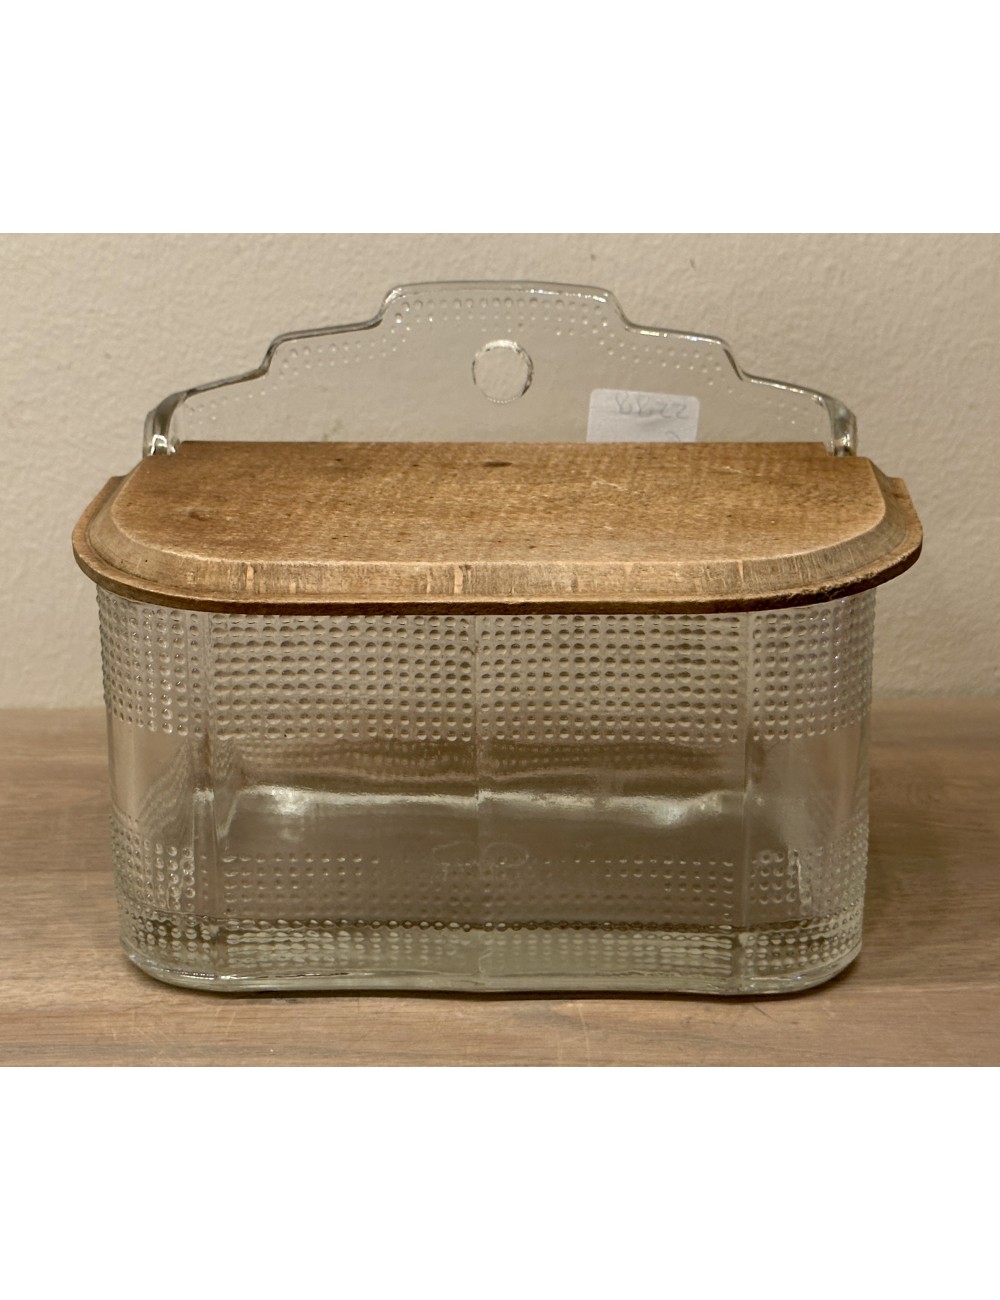 Salt jar / Storage jar - glass - with wooden lid